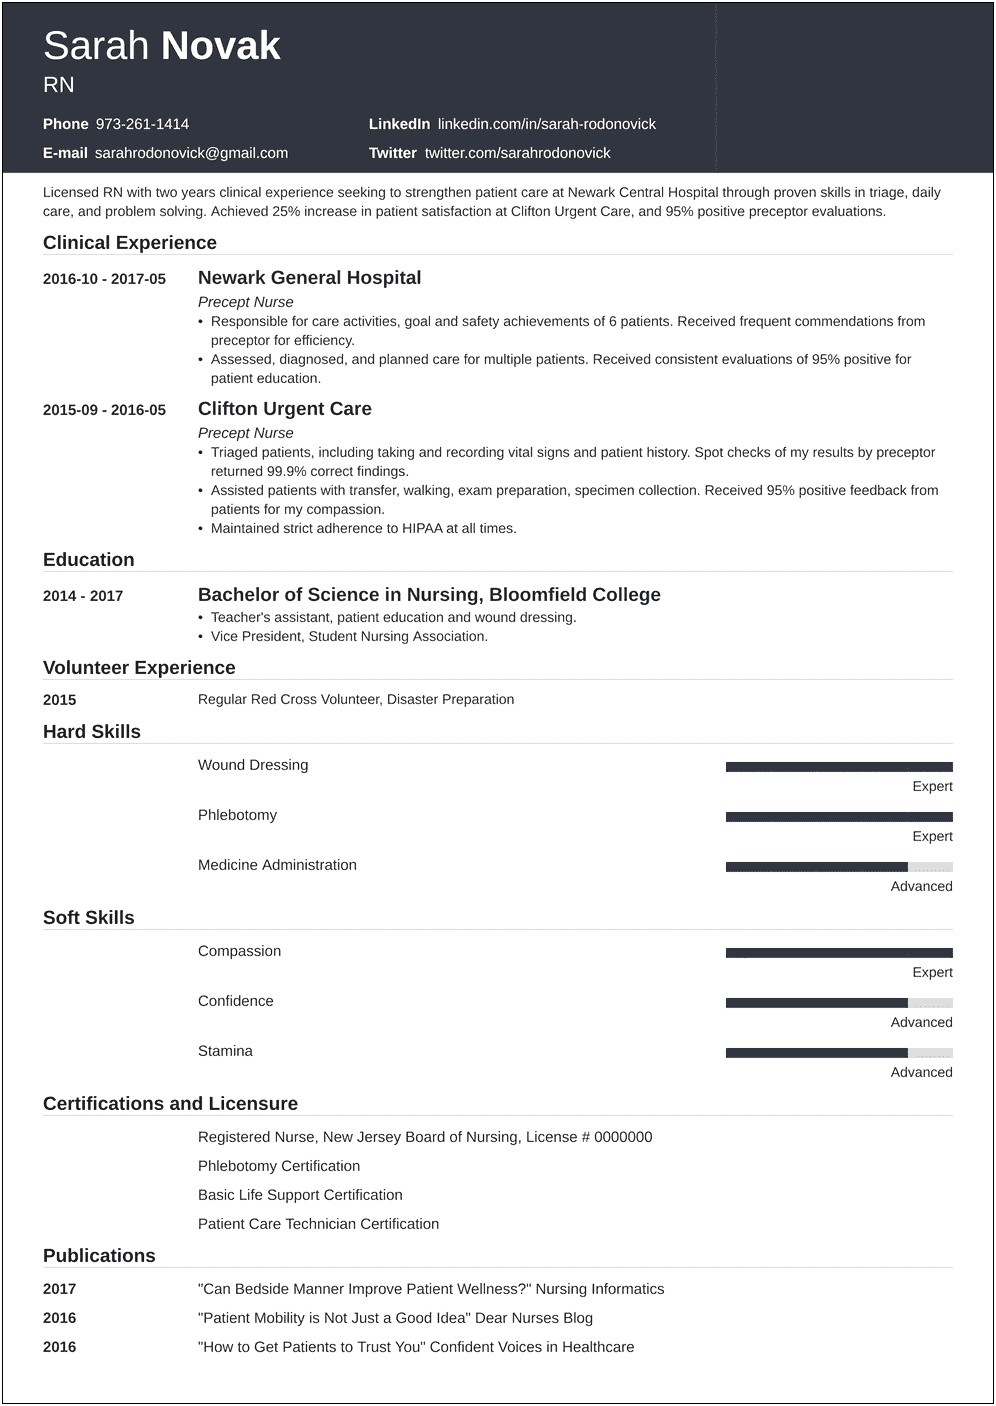 Best Resume Descriptor For Nursing Student